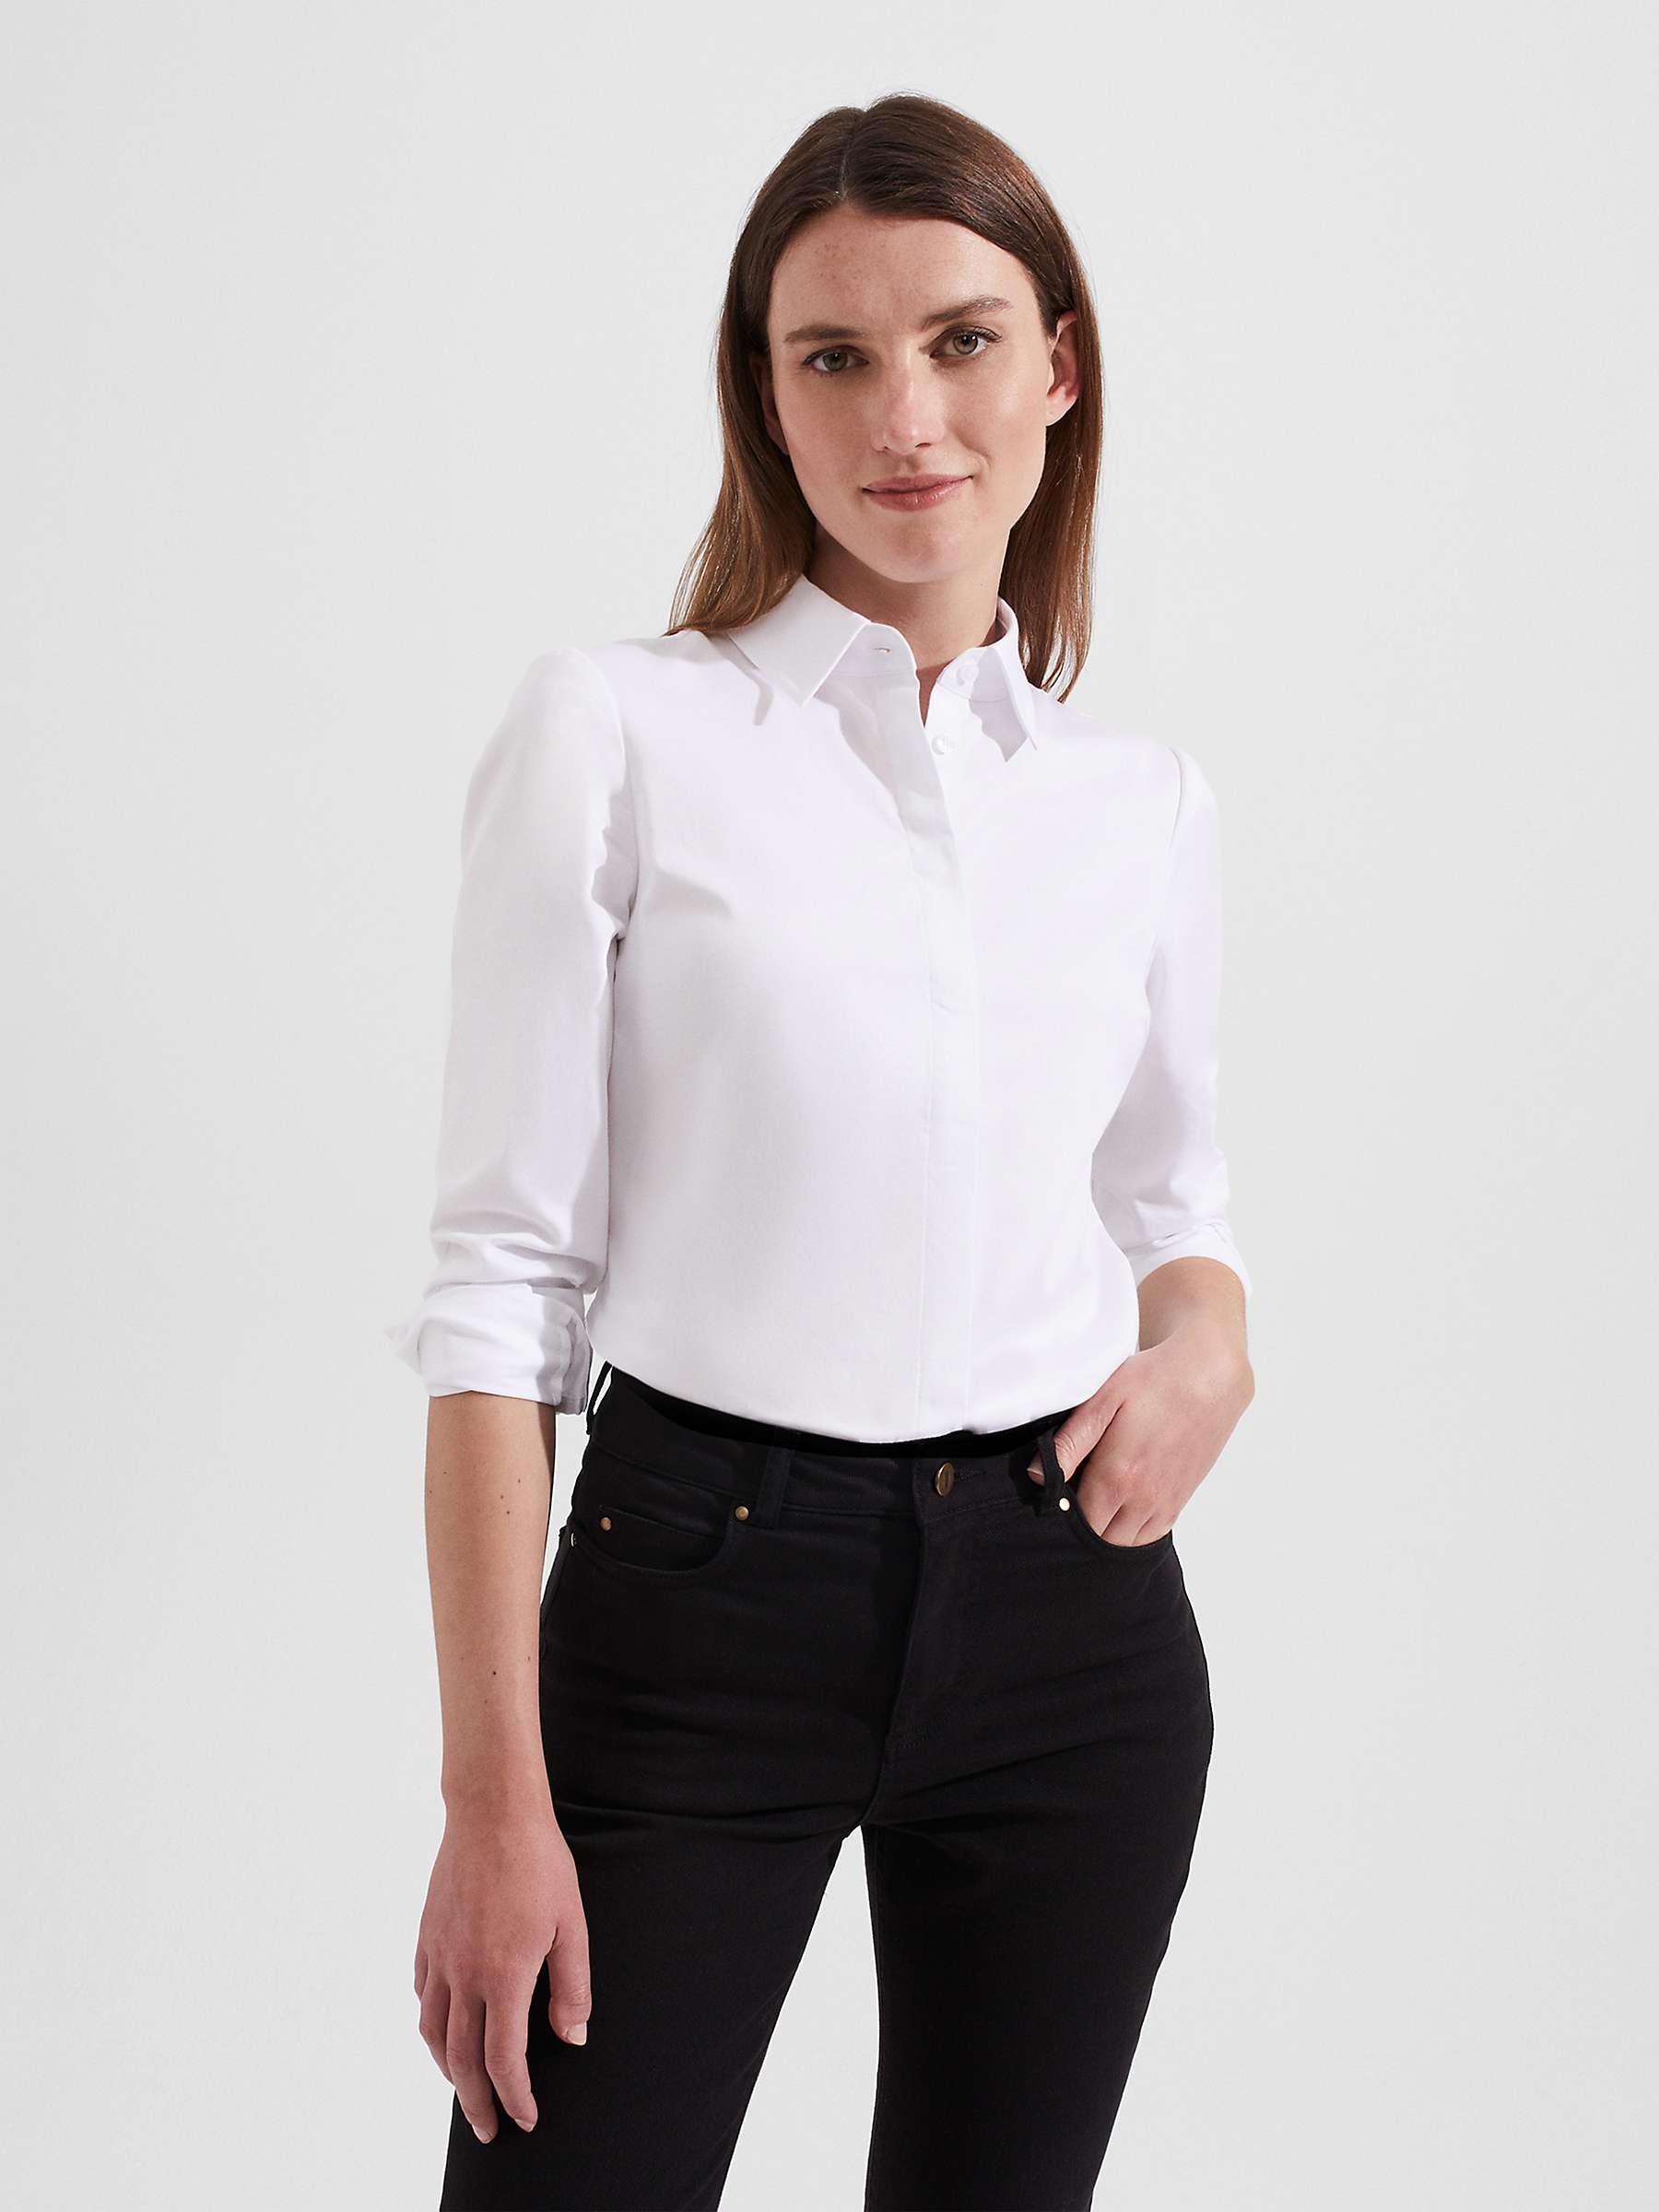 Hobbs Victoria Plain Long Sleeve Shirt, White at John Lewis & Partners